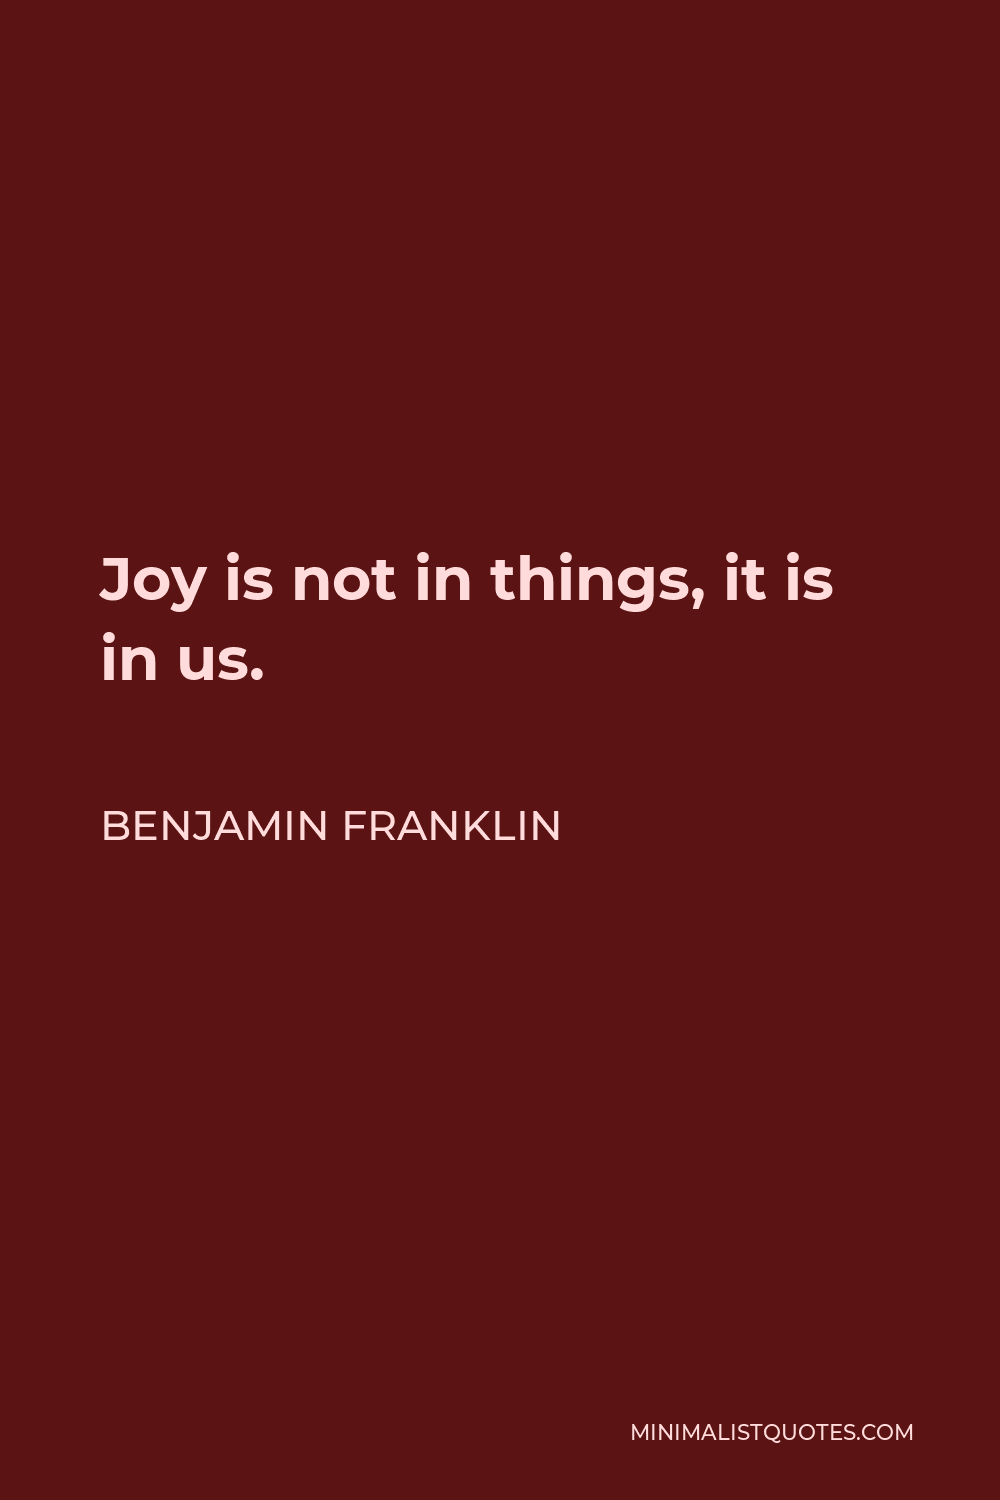 Benjamin Franklin Quote - Joy is not in things, it is in us.